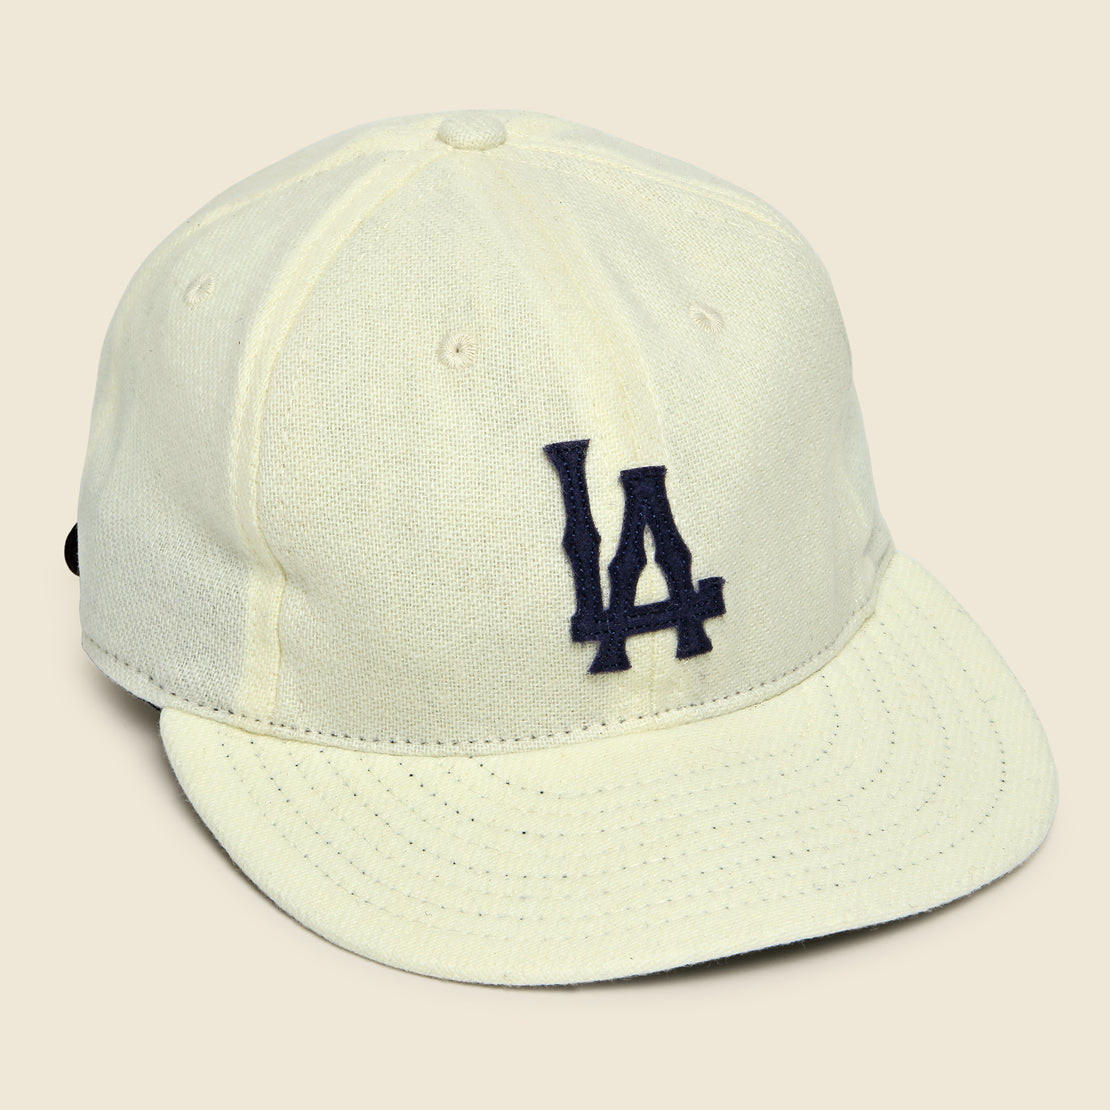 Los Angeles Wool Hat - Cream